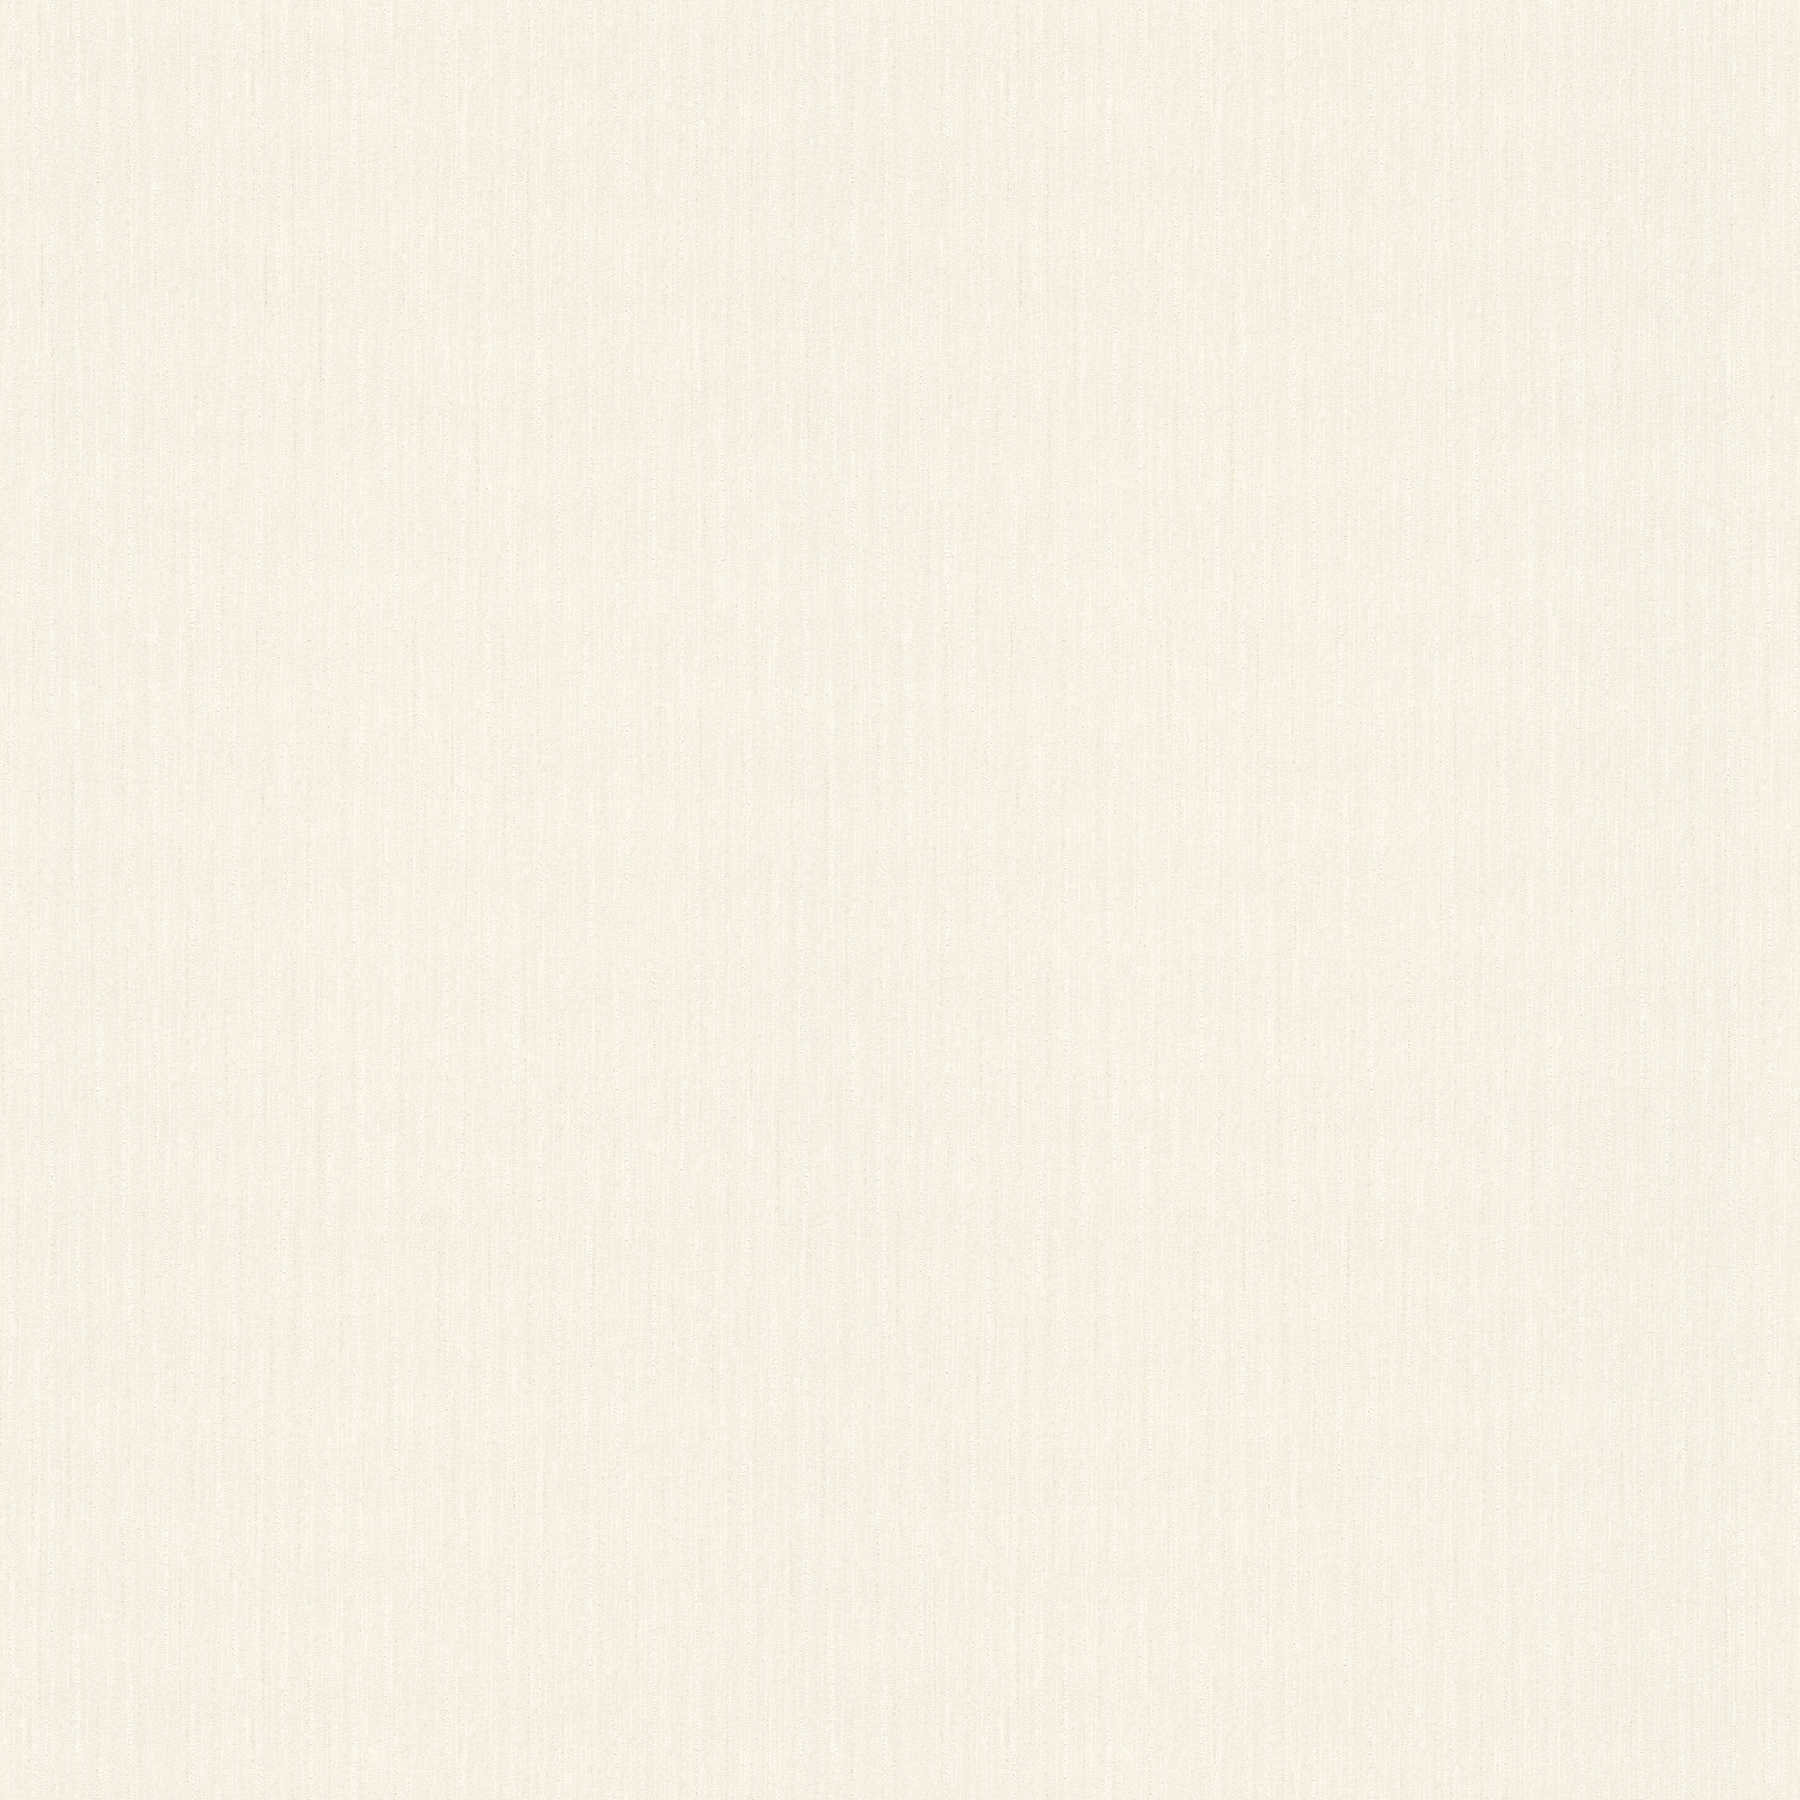 Cream coloured plain wallpaper with glitter threads - white, cream
